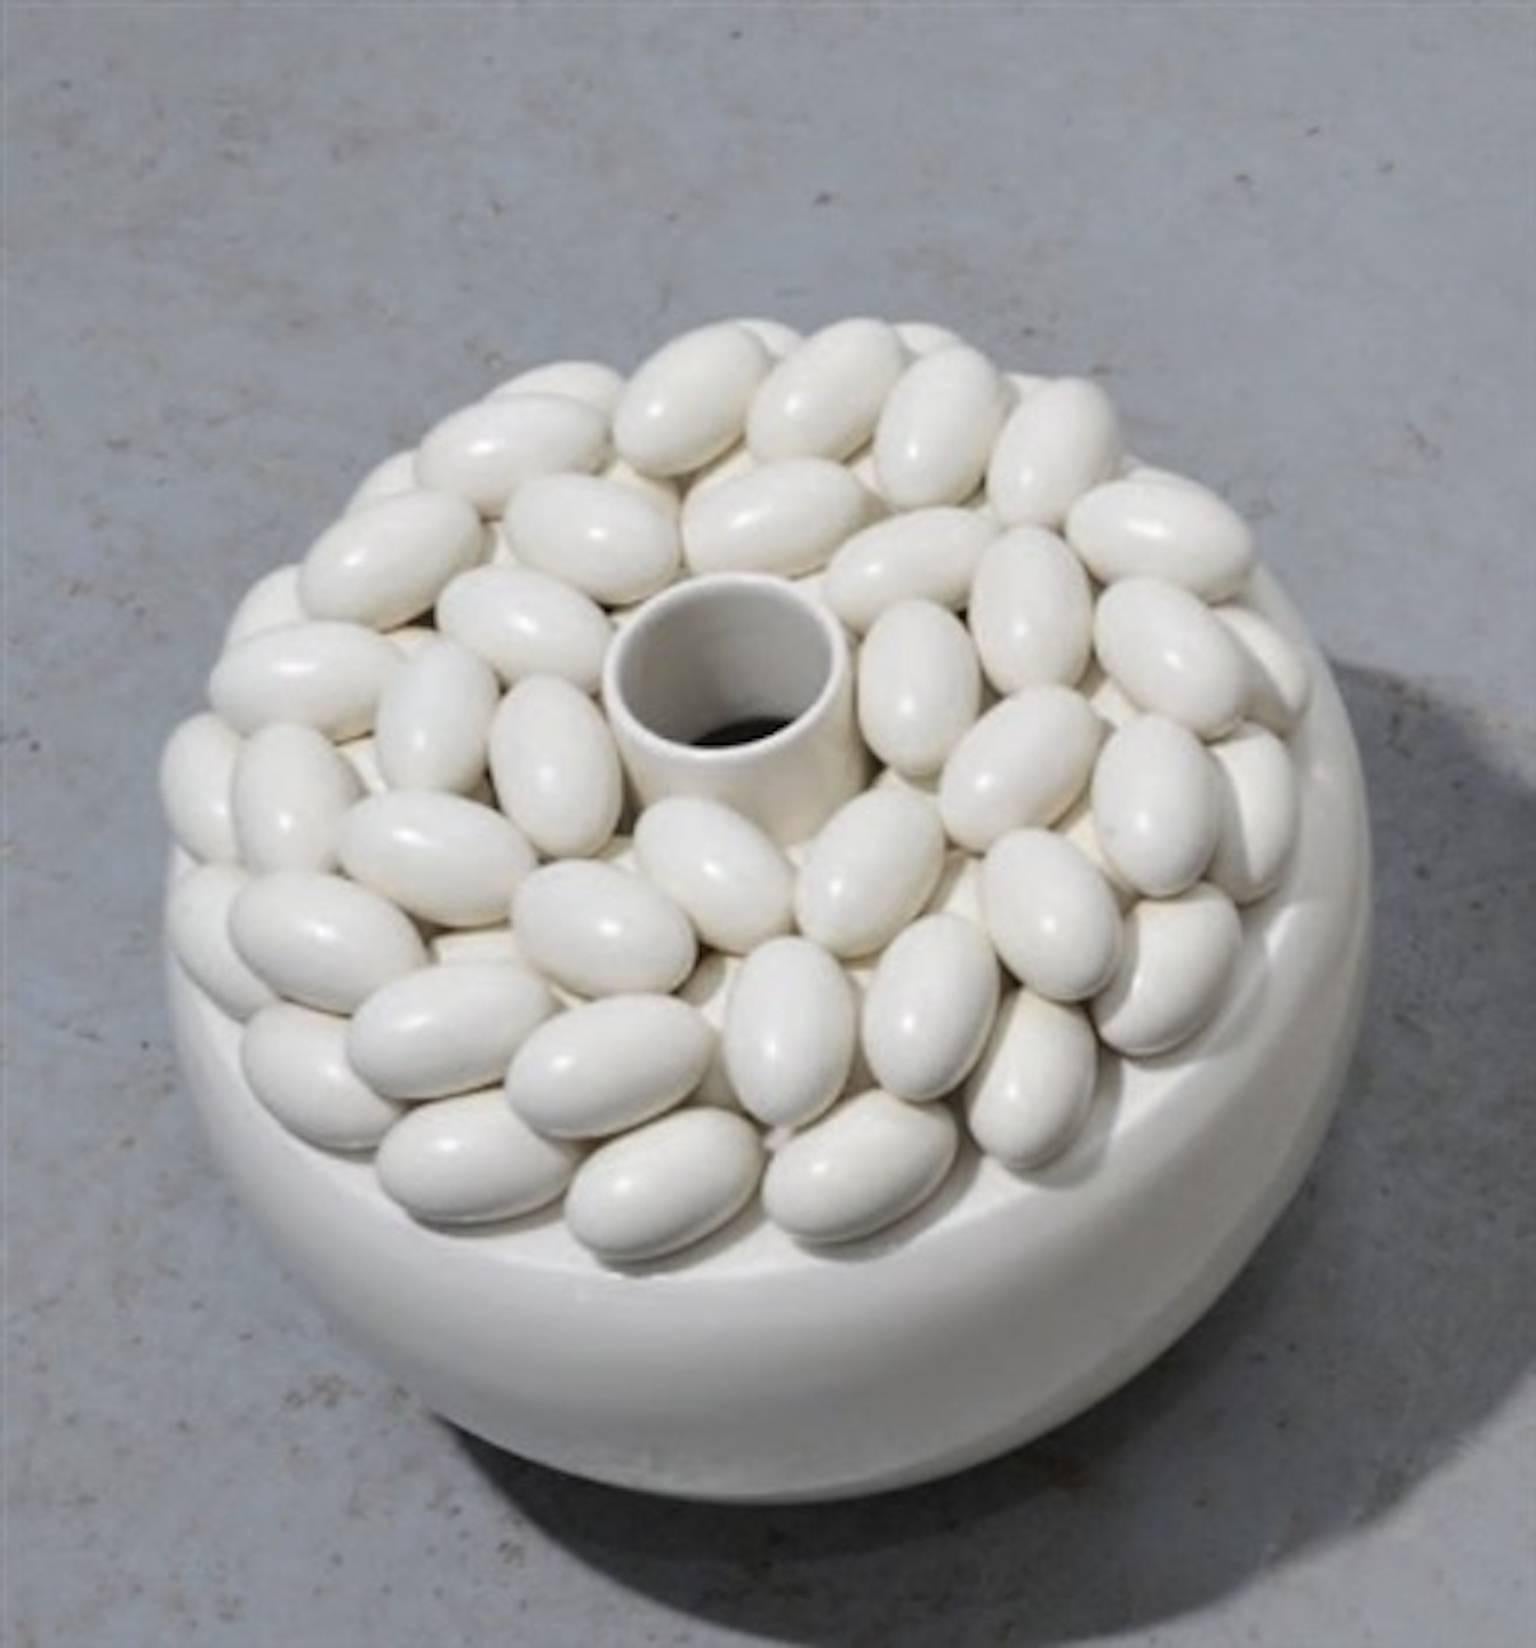 Modern Martine Bedin, Pasqua Ceramic Sculpture, Superego Editions, Italy